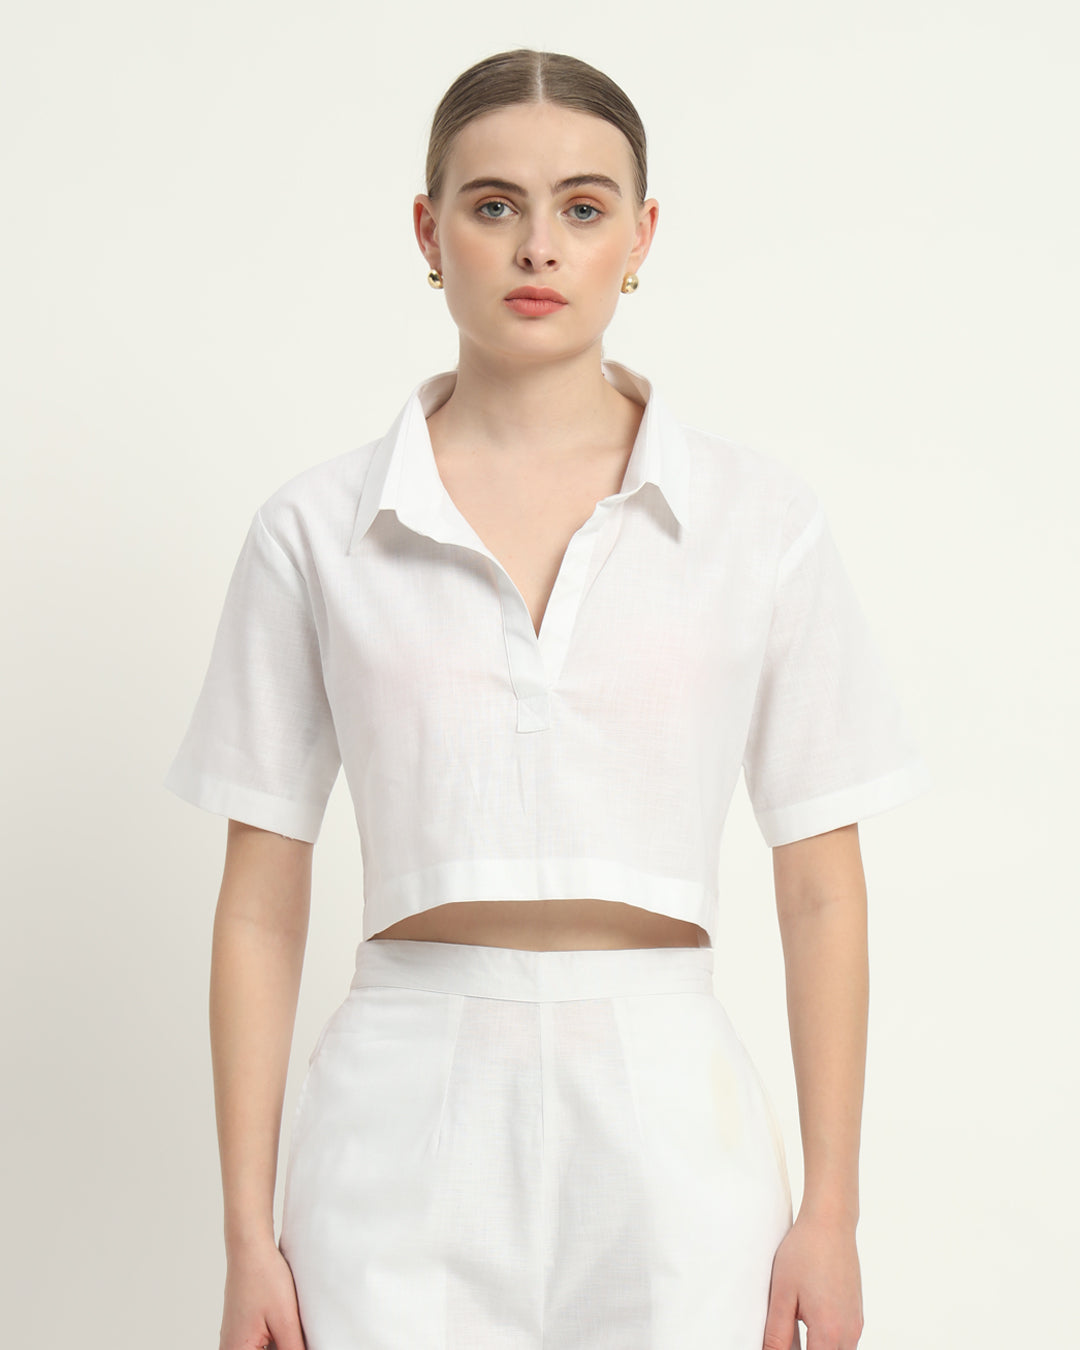 Shorts Matching Set-White Linen Cityscape